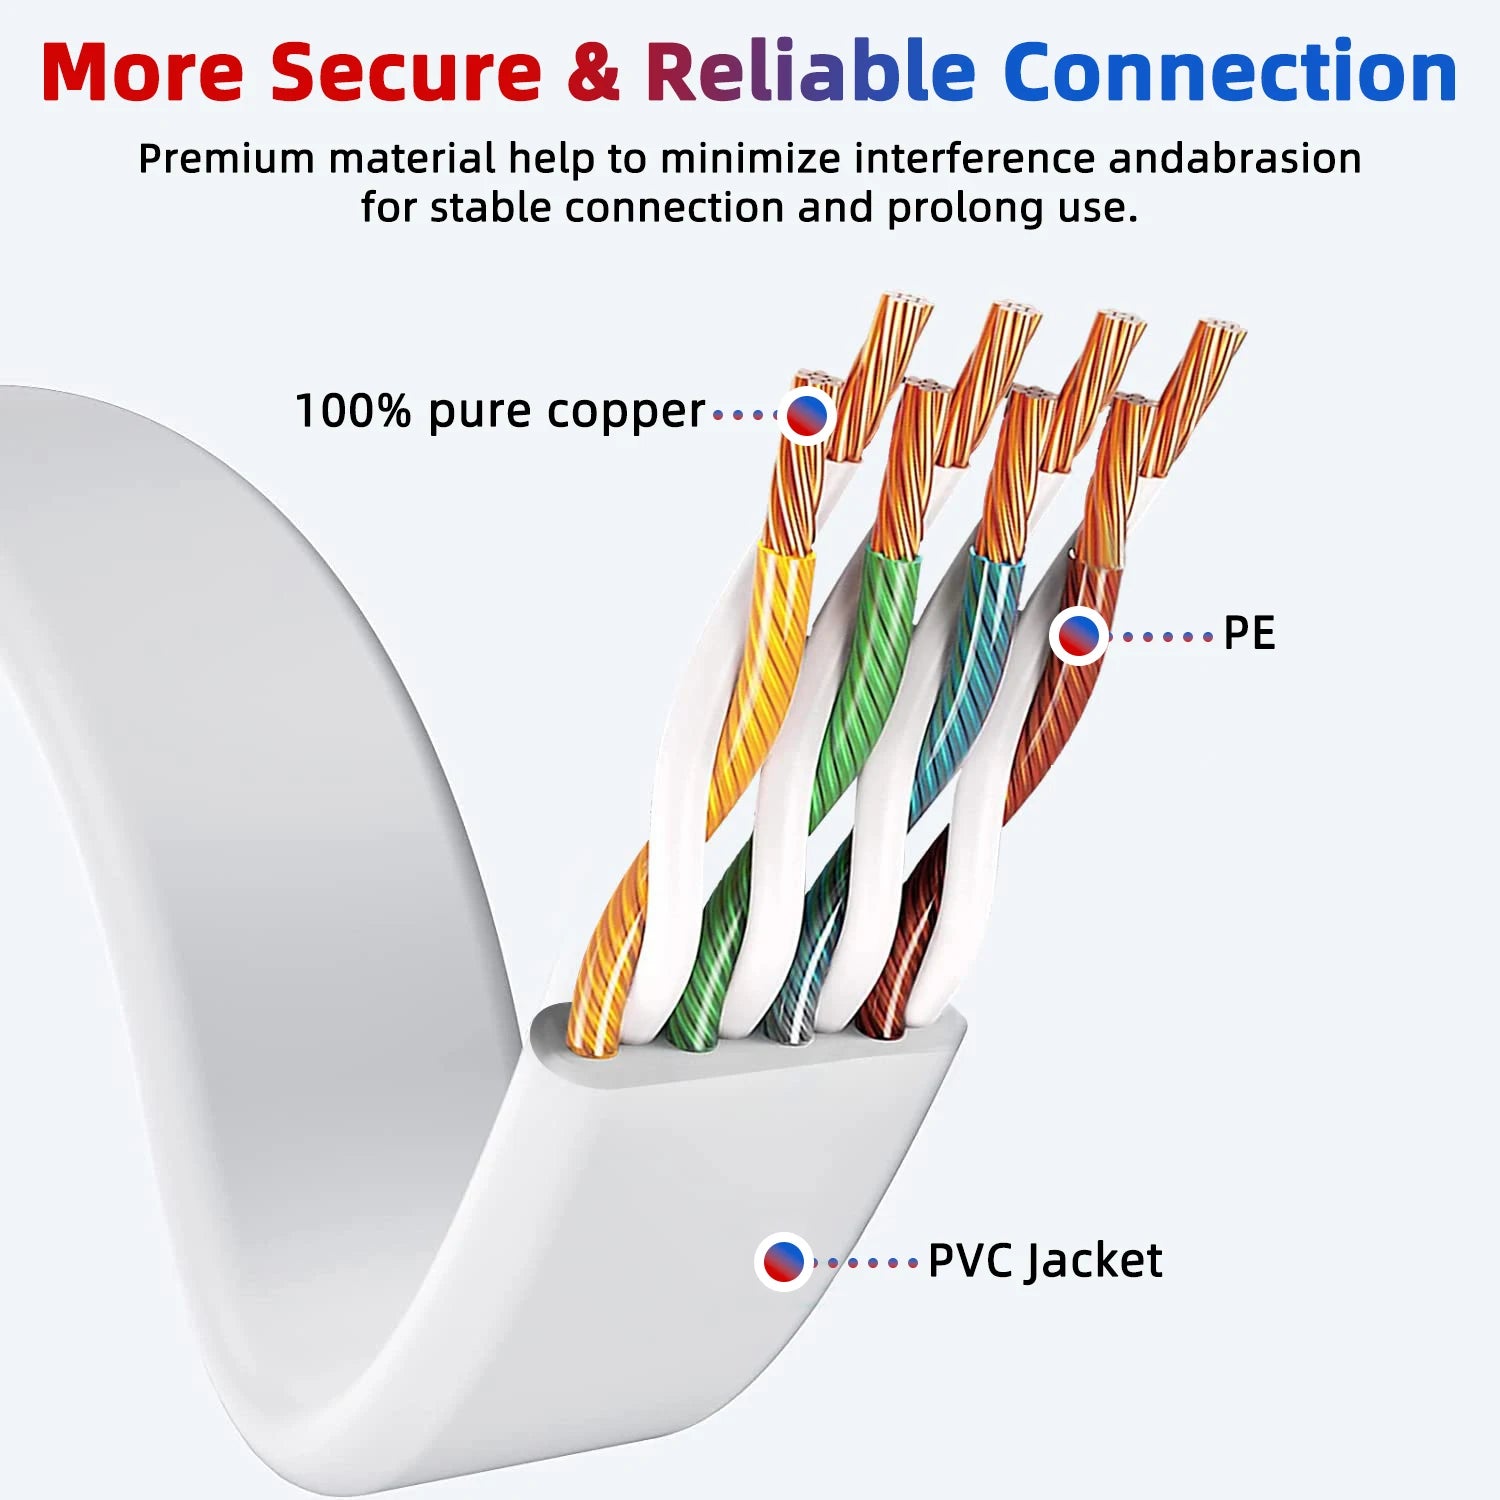 HENGSUR Ethernet Cable Cat6 Flat UTP Rj45 Internet Network Cable 5m 10m 15m 30m Lan Cord for Laptop Router Patch Cord Cat 6